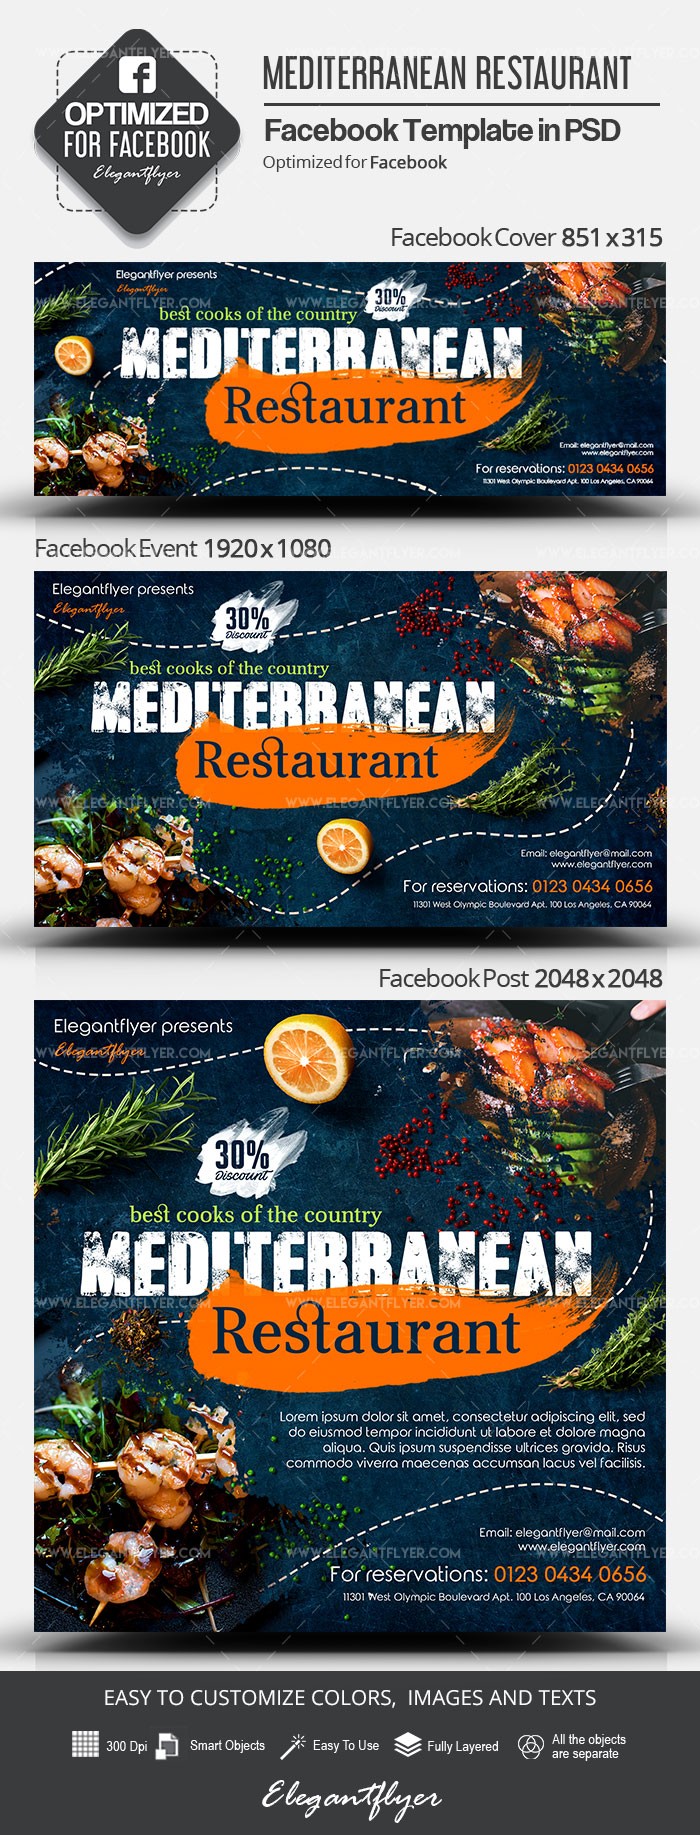 Restaurante mediterrâneo no Facebook. by ElegantFlyer